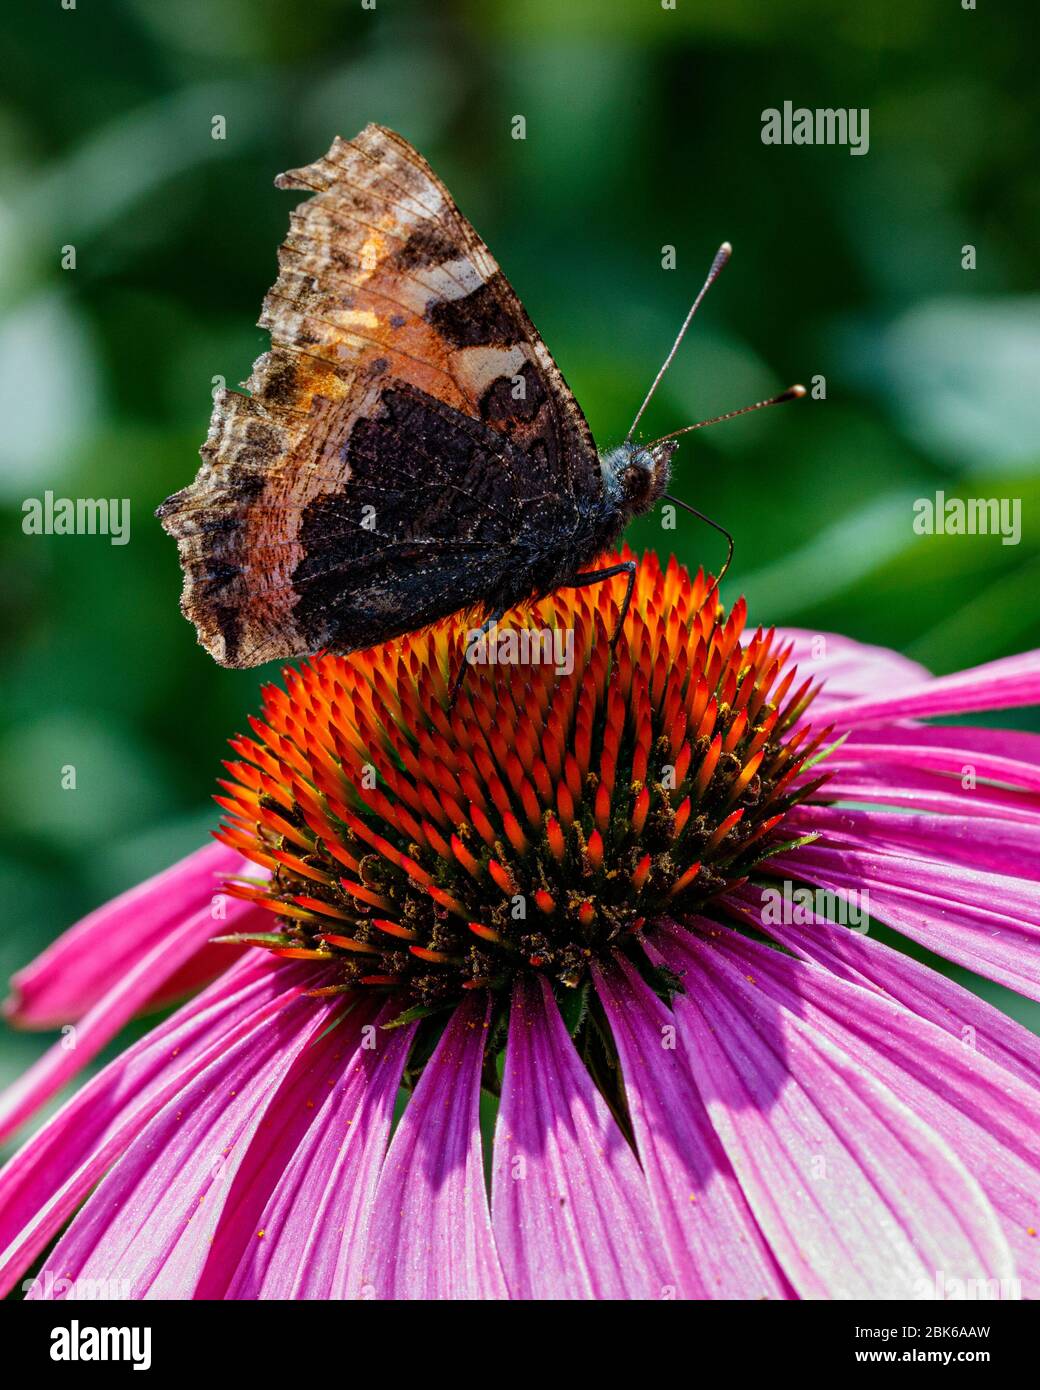 butterfly resting on echnachica flower Stock Photo